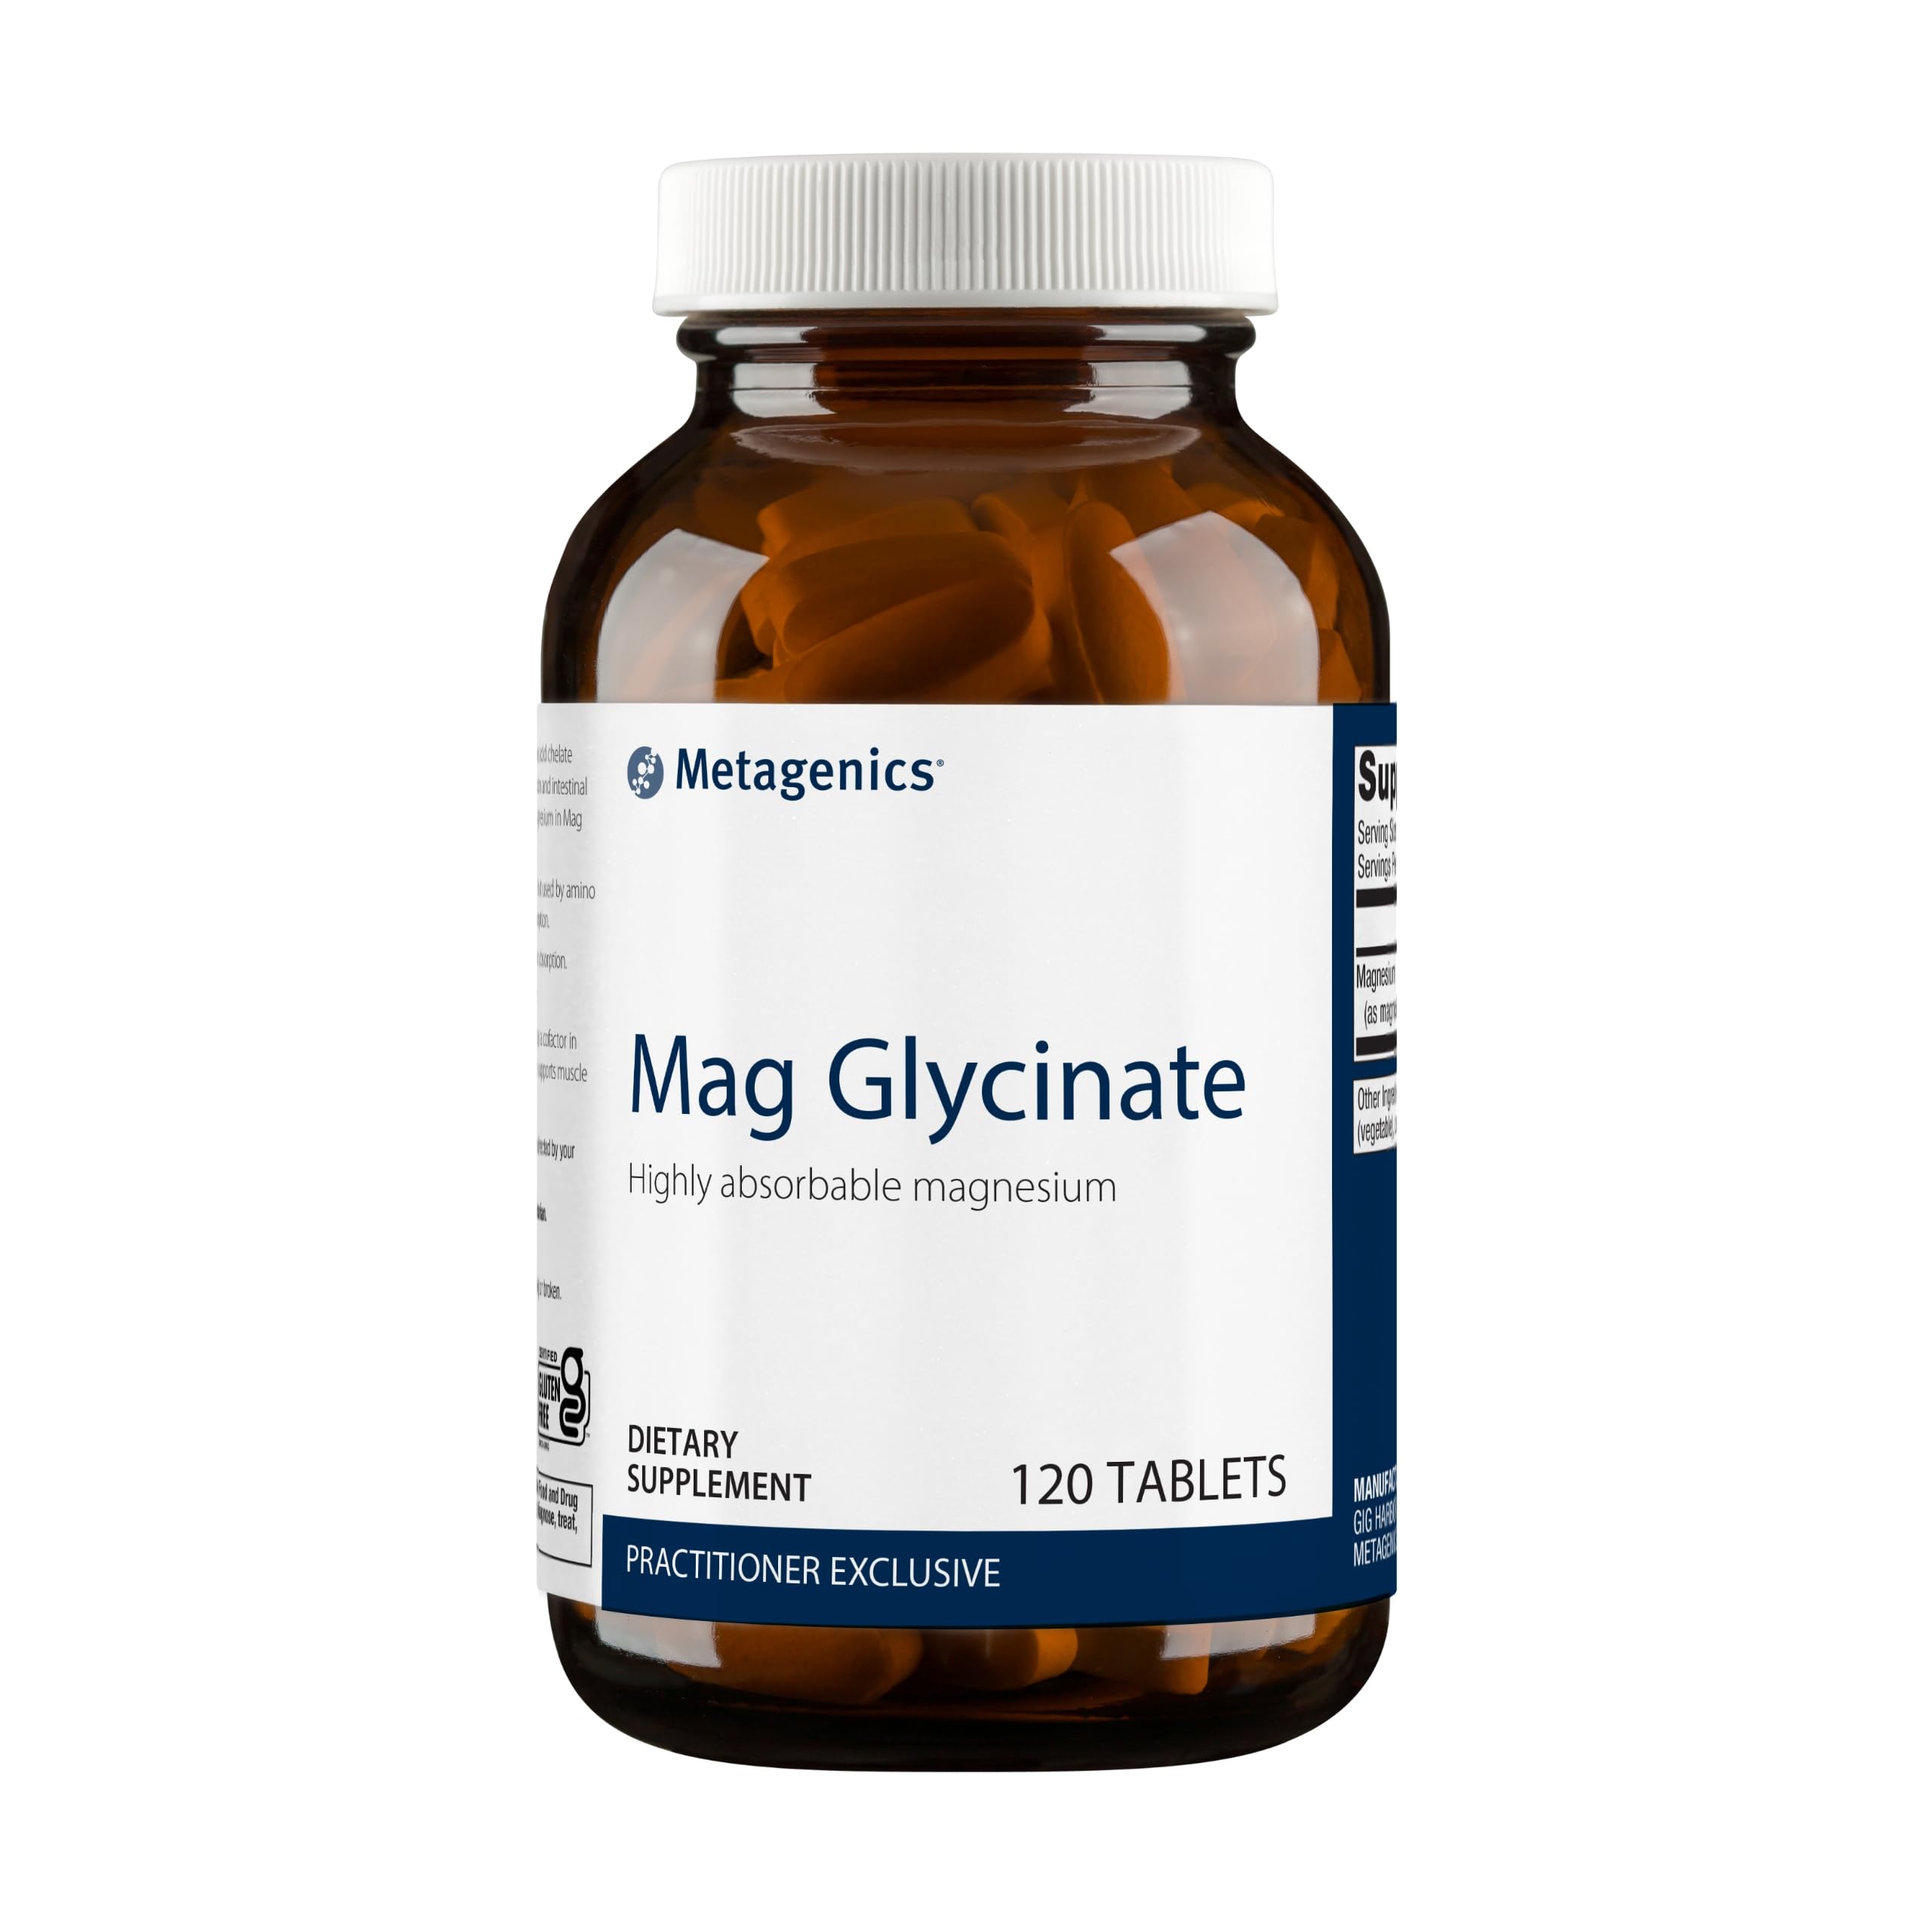 Metagenics Mag Glycinate Nervous System Support - 120 Tablets